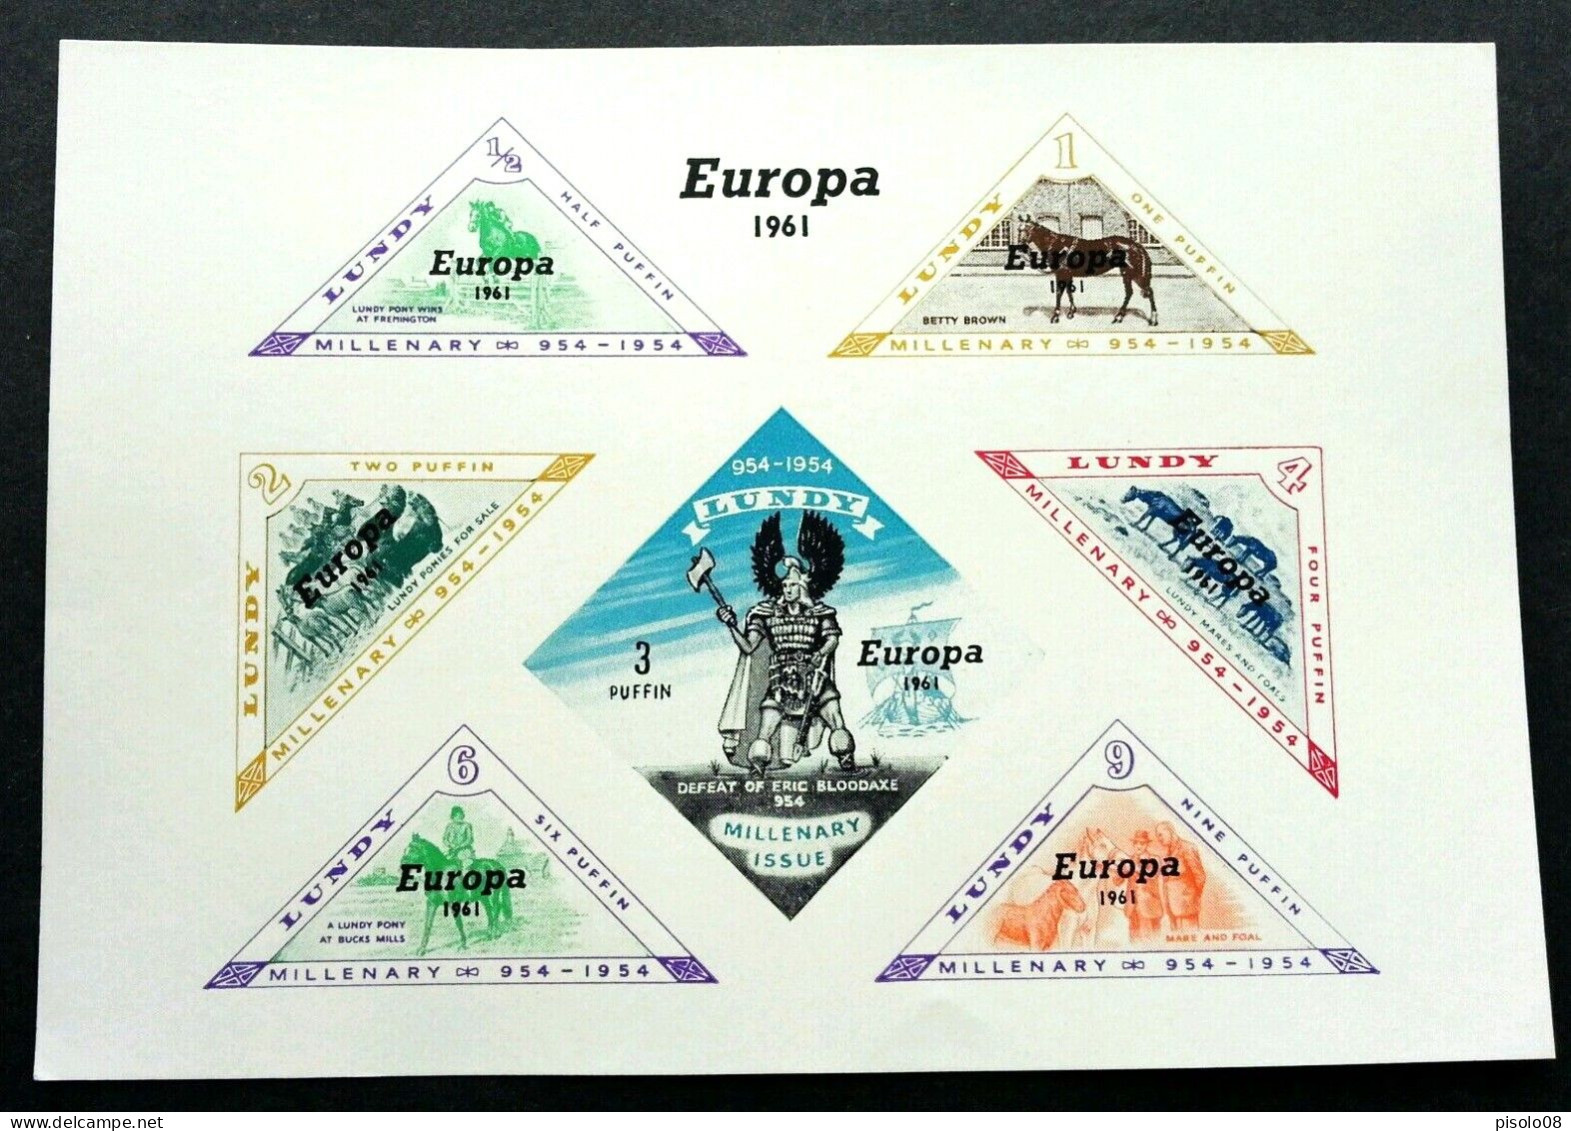 EUROPA JUGOSLAVIA 1961 LUNDY MILLENARY 954-1954 FOGLIETTO - Blocks & Sheetlets